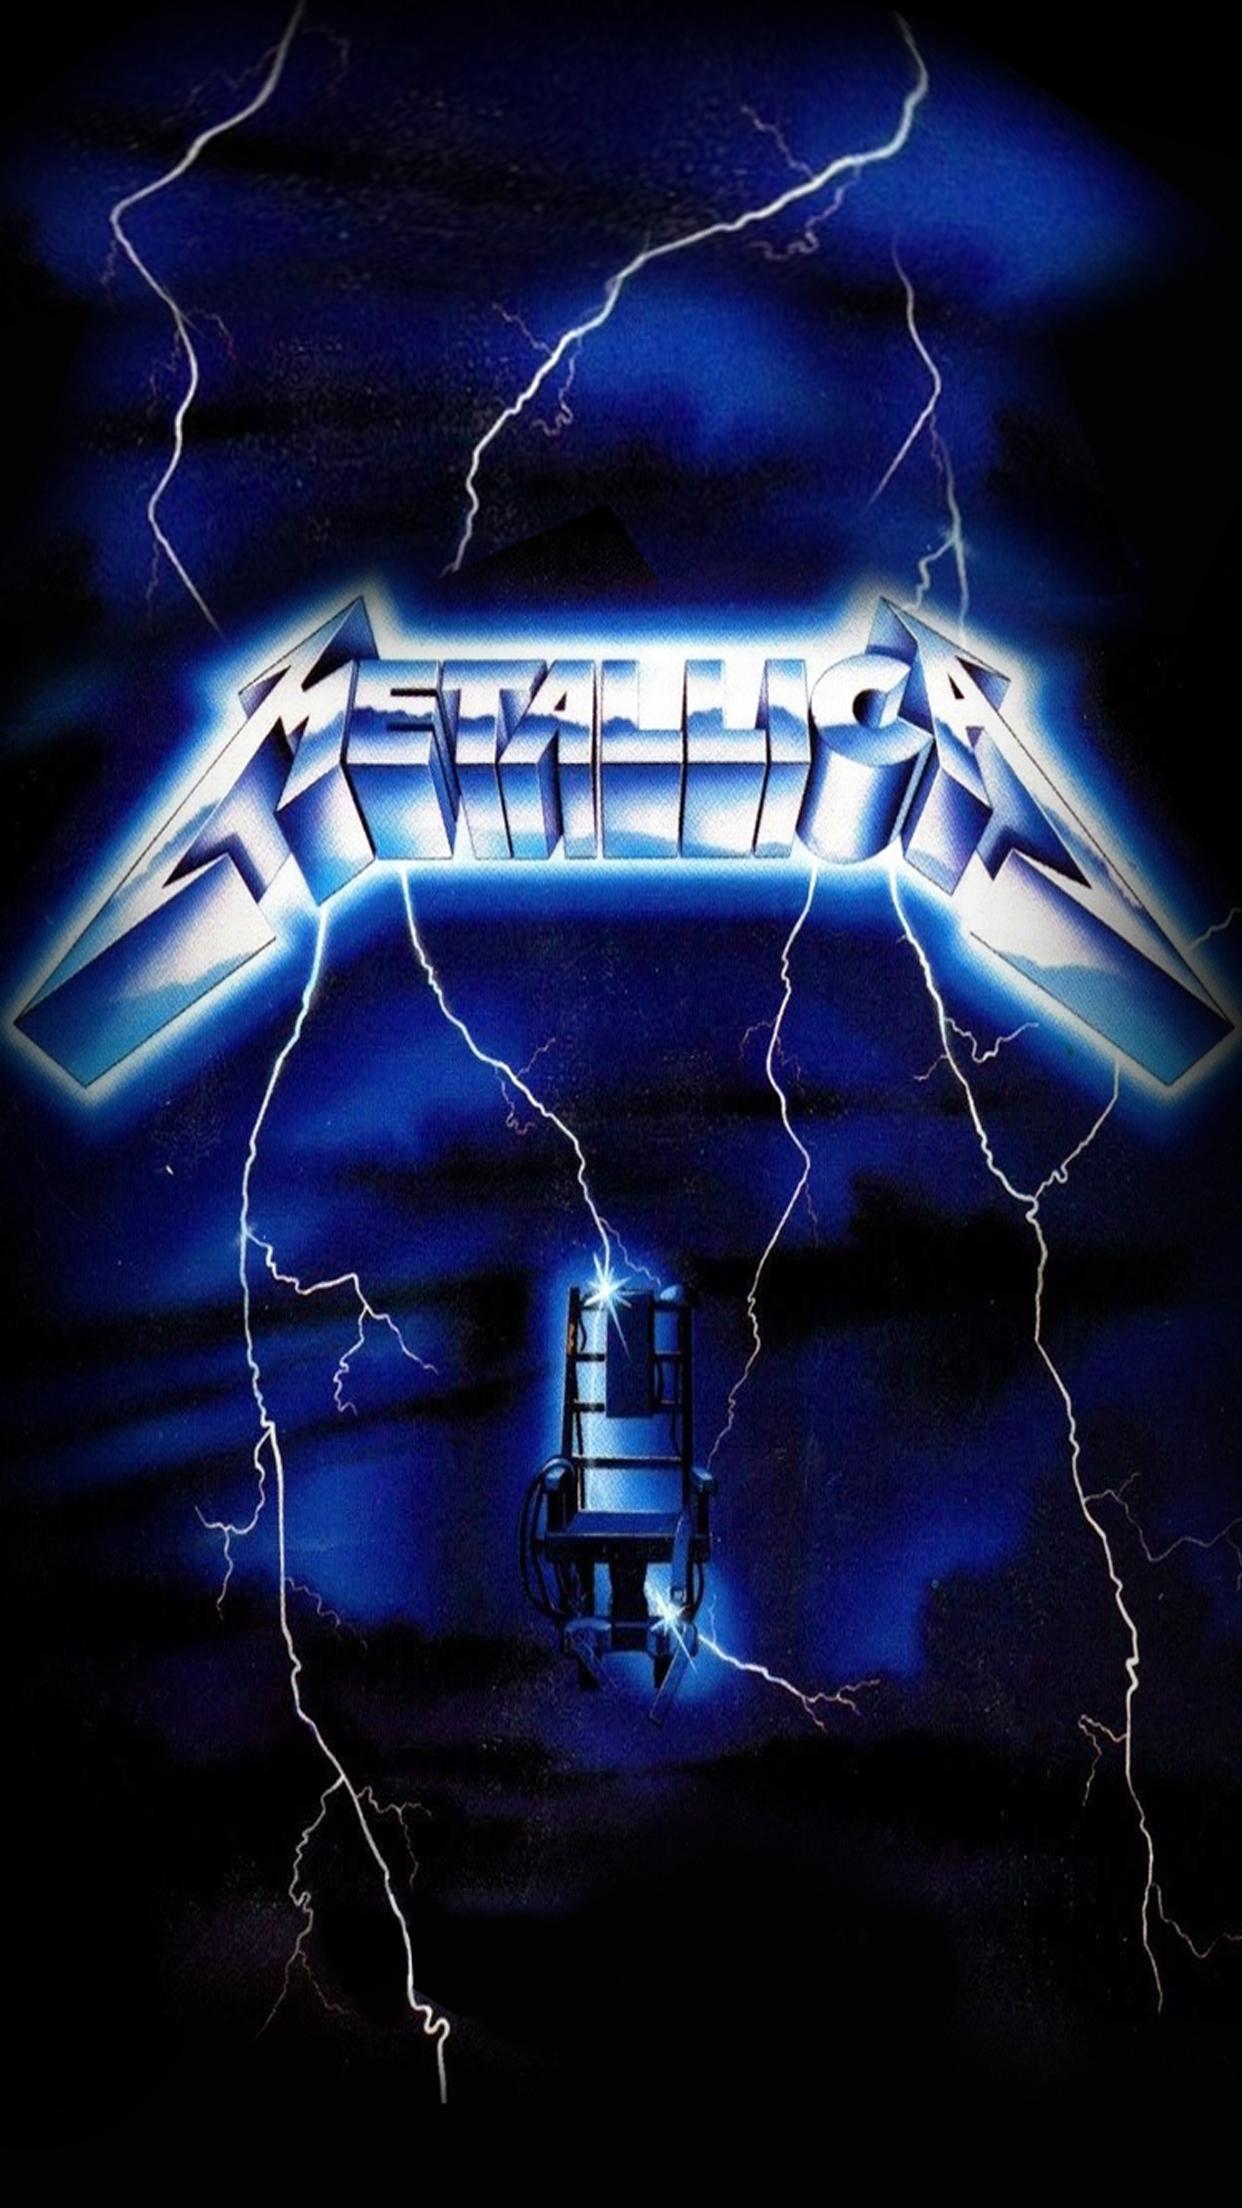 Metallica Ride the Lightning обложка